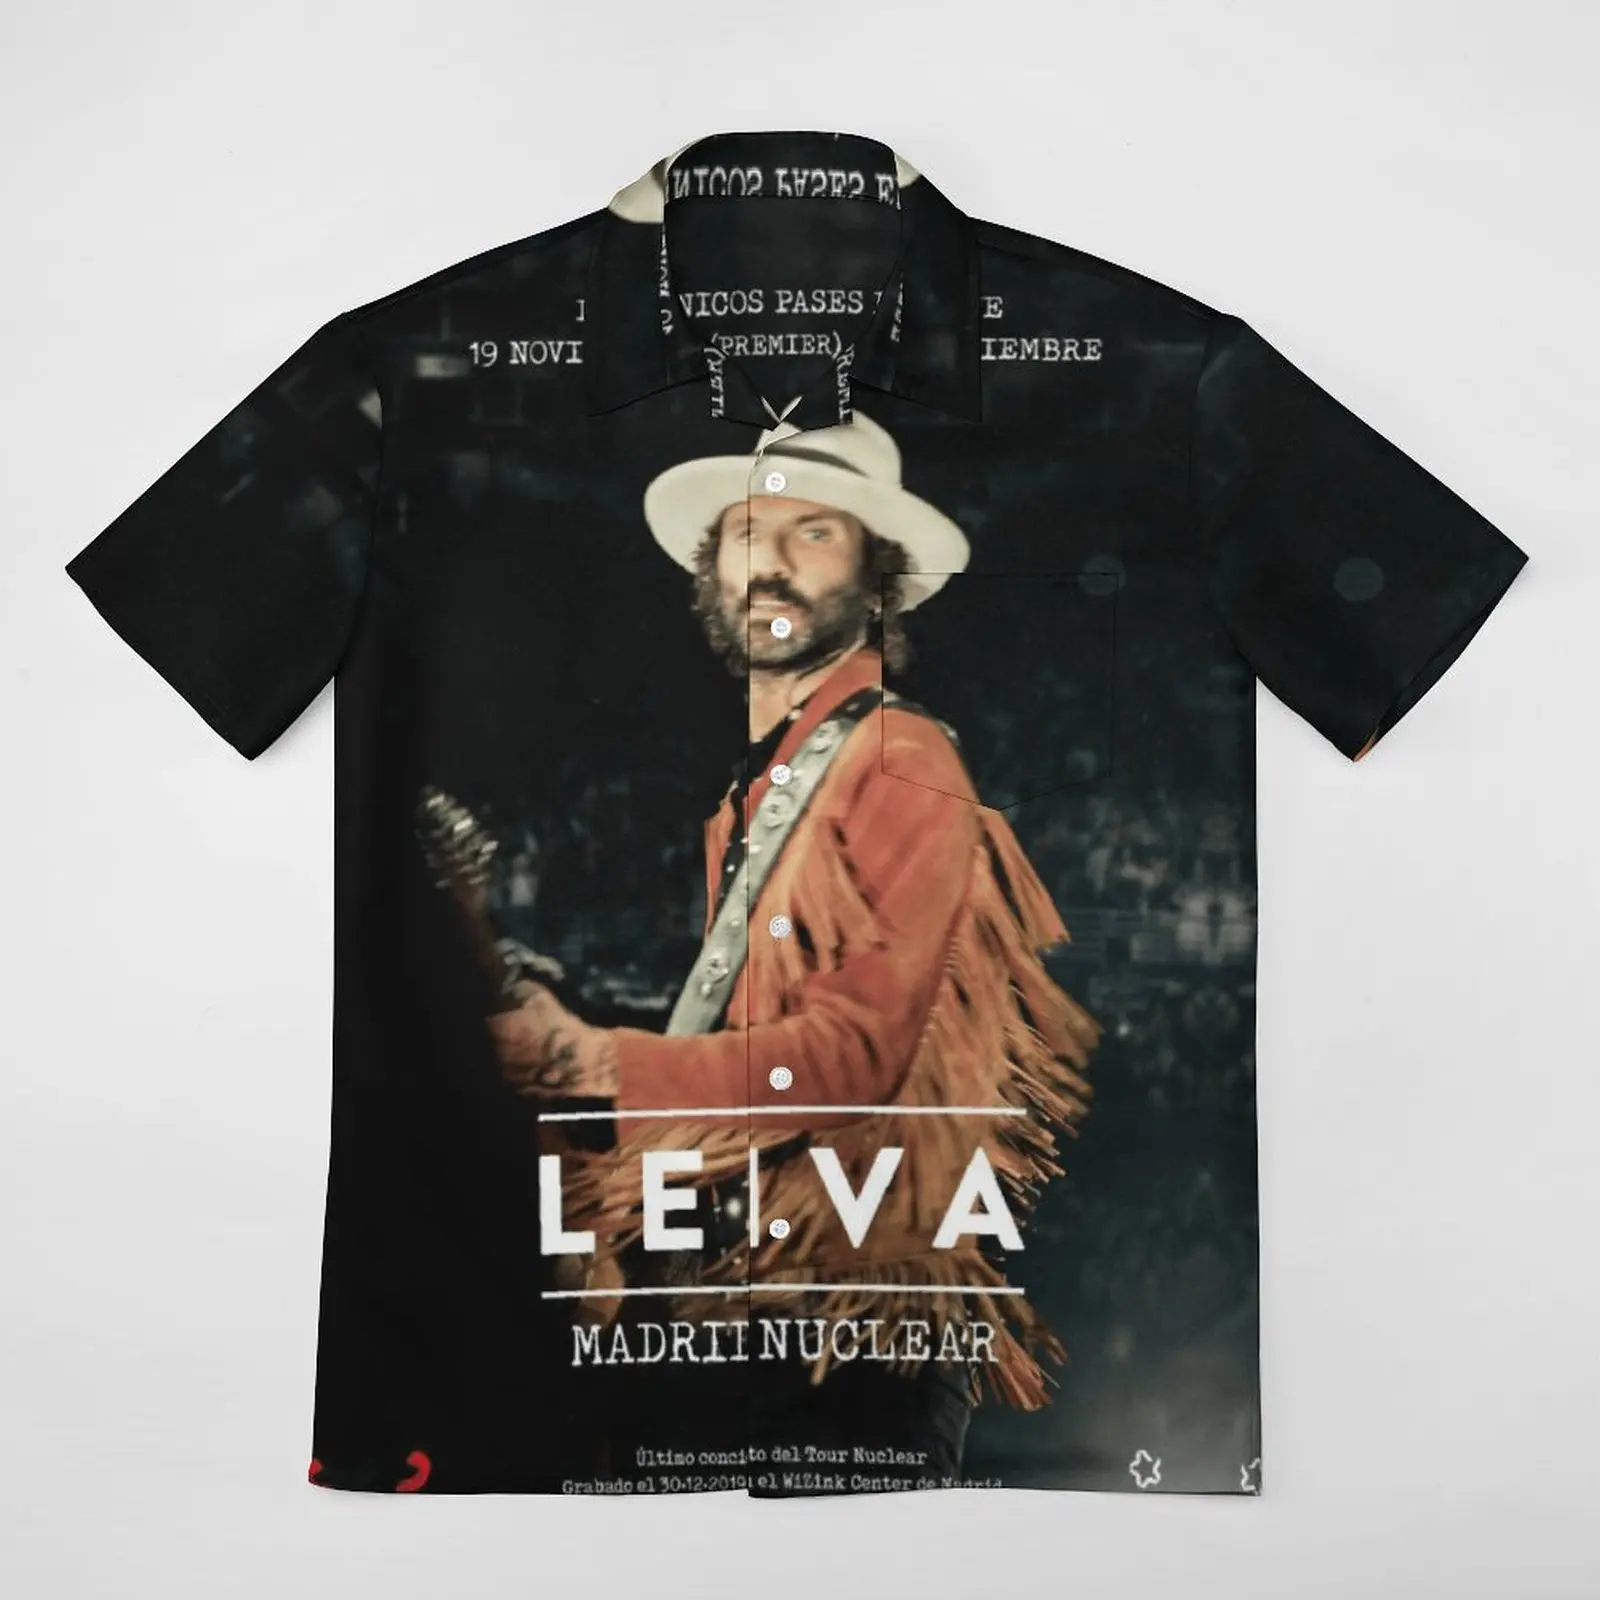 

A Short Sleeved Shirt Leivas, Madrid Nuclear (2020) Tshirt Pantdress High Grade Funny GraphicBeach Eur Size